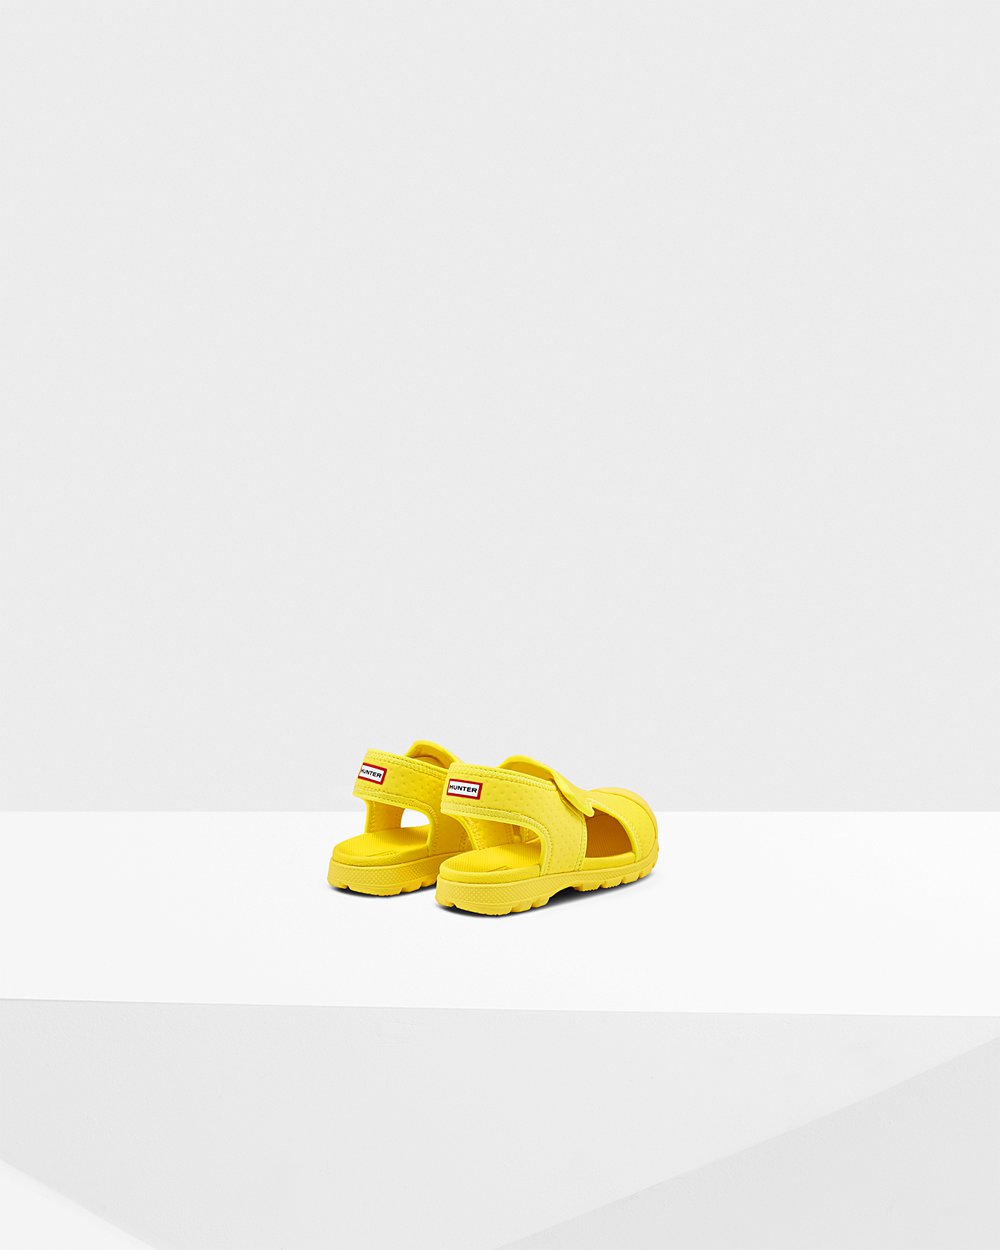 Kids Sandals - Hunter Original Little Outdoor Walking (34CKPDGZS) - Yellow